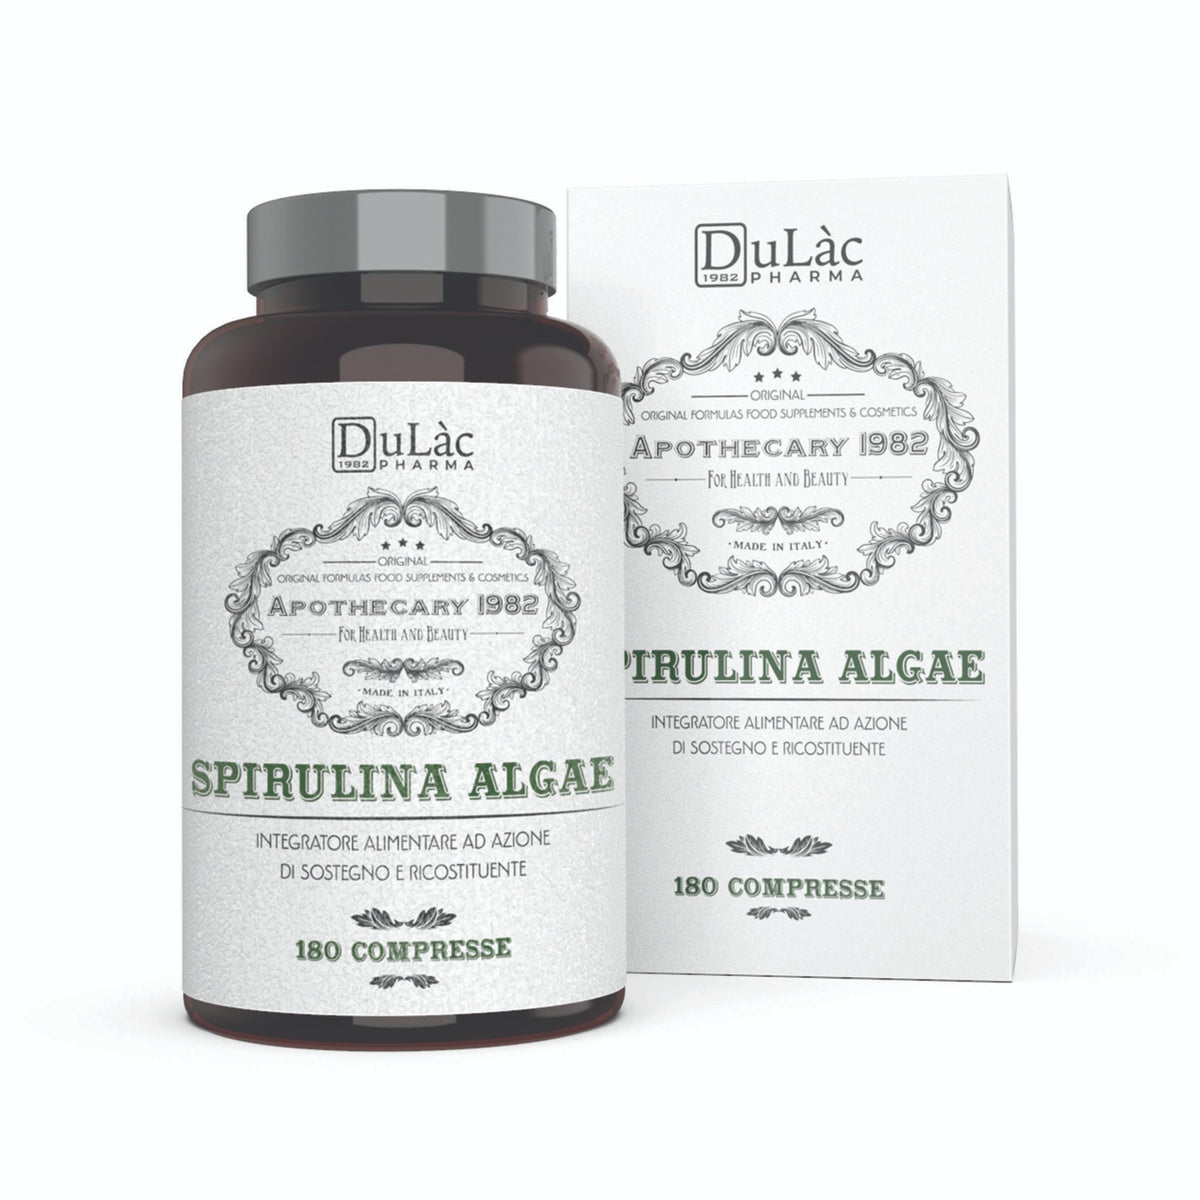 Dulac Spirulina Algae 180 compresse